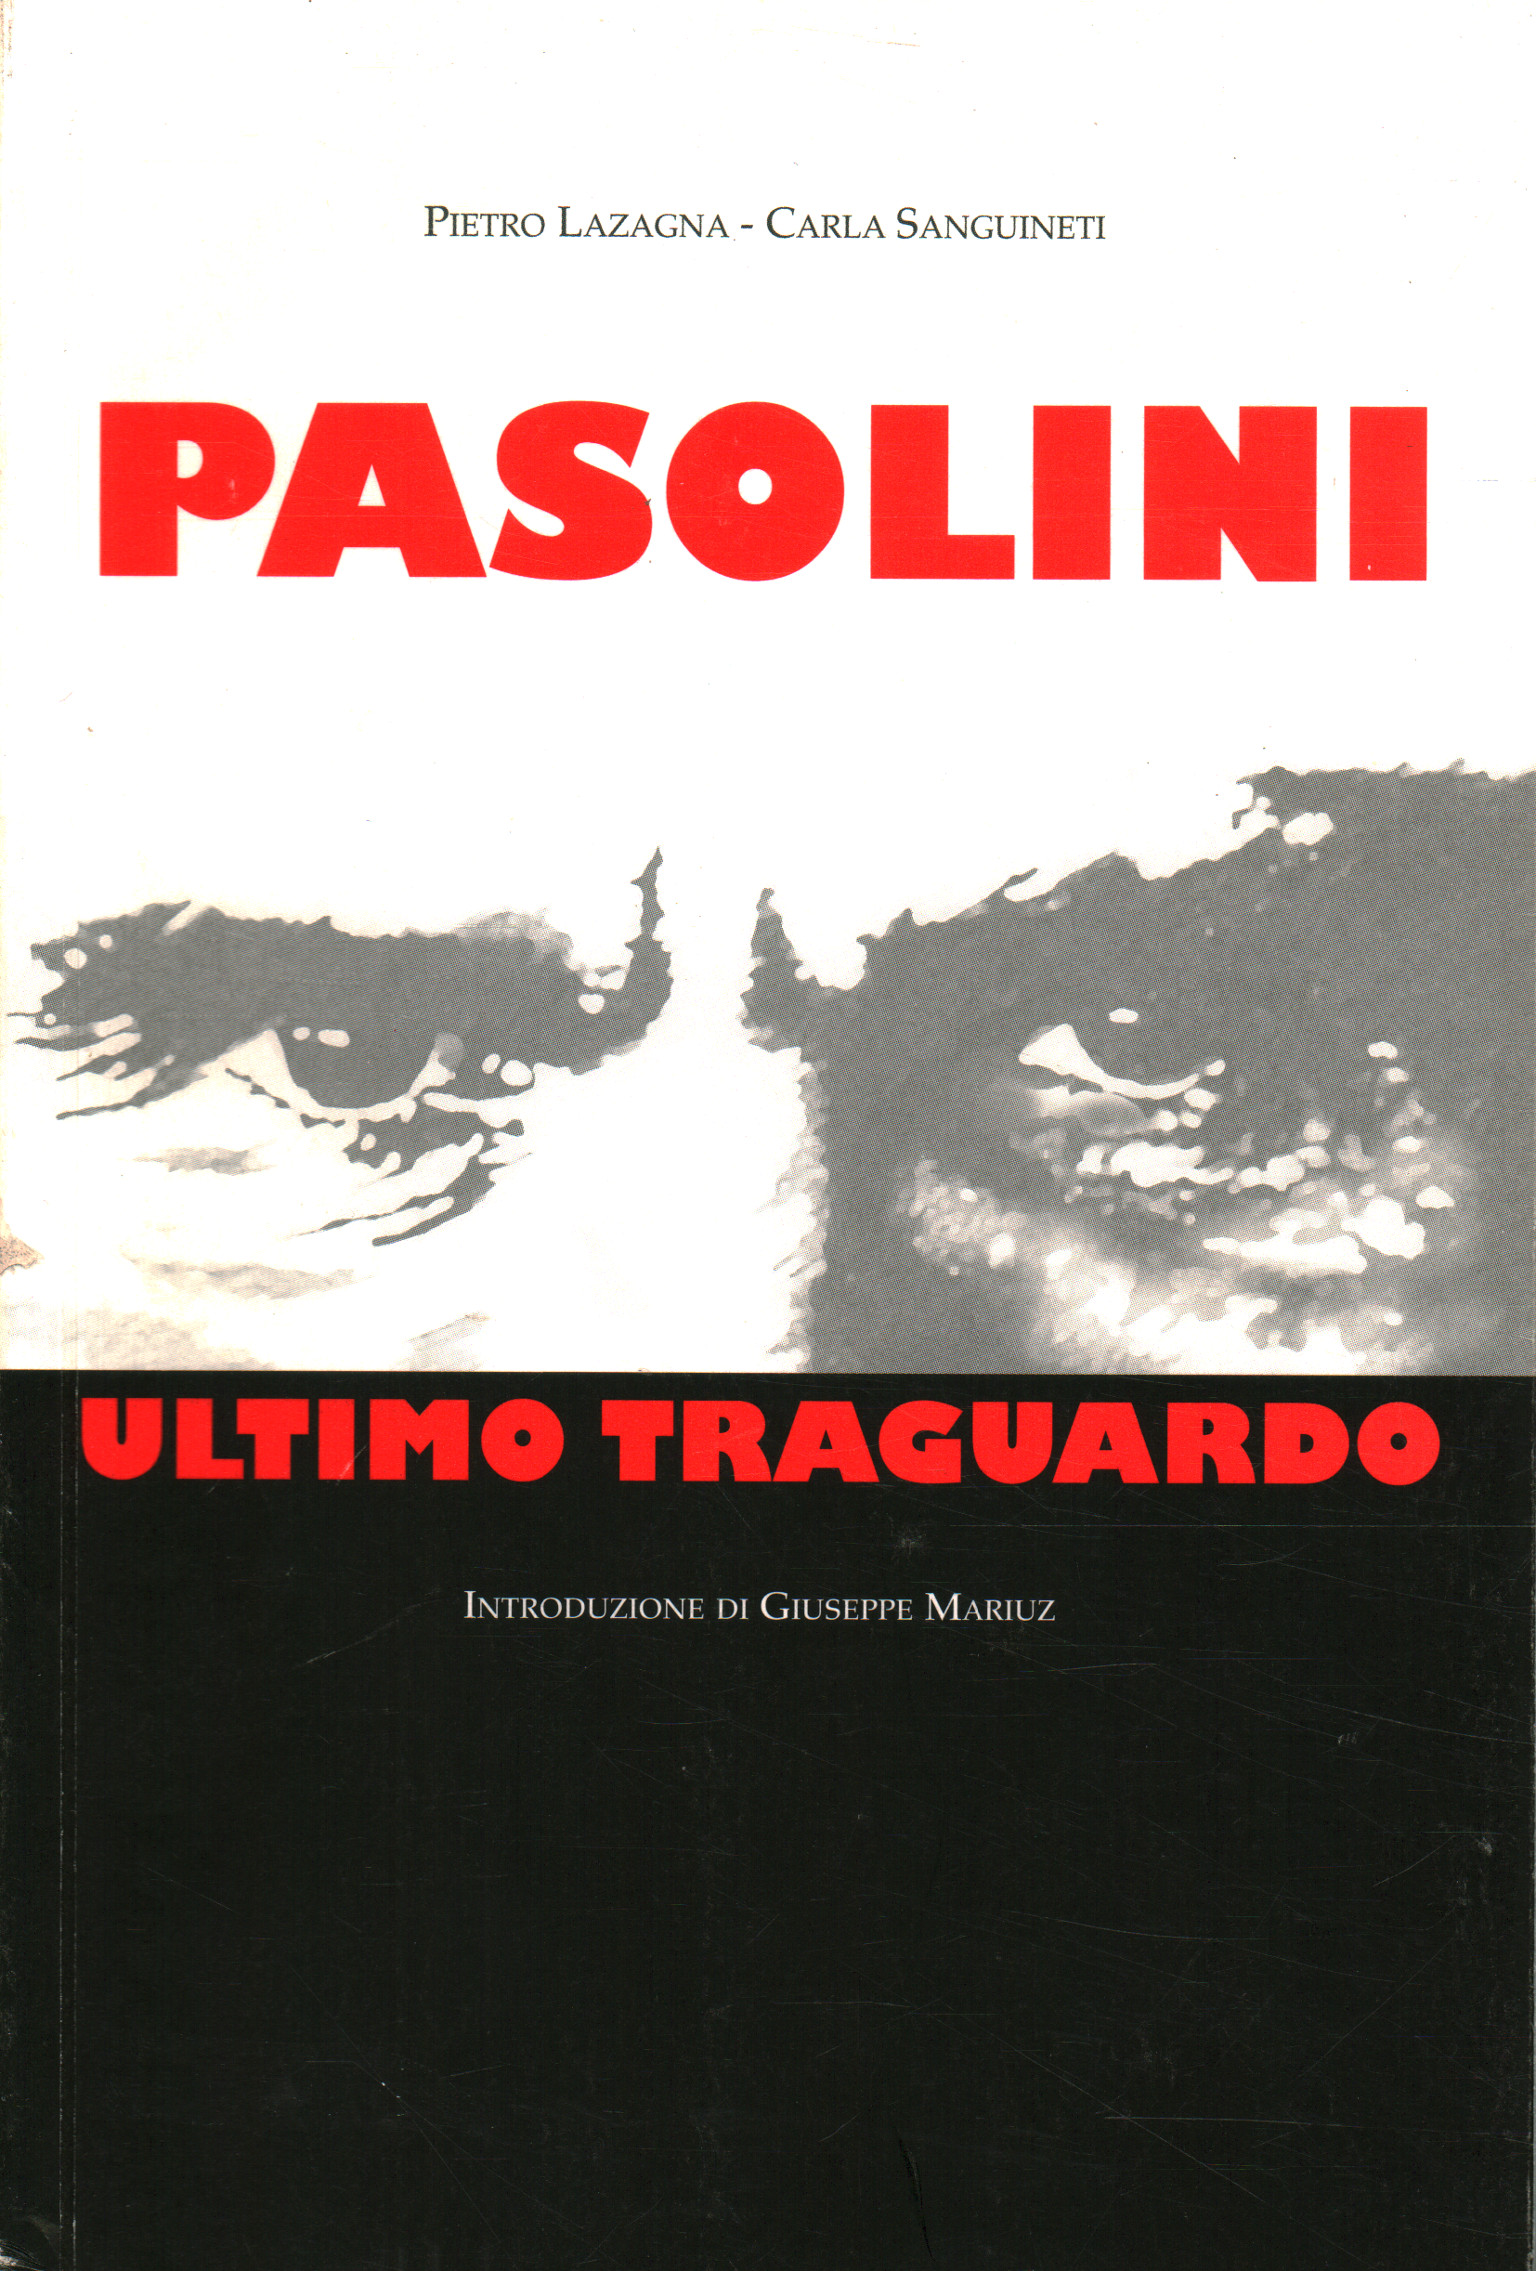 Pasolini letztes Tor, Pietro Lazagna Carla Sanguineti